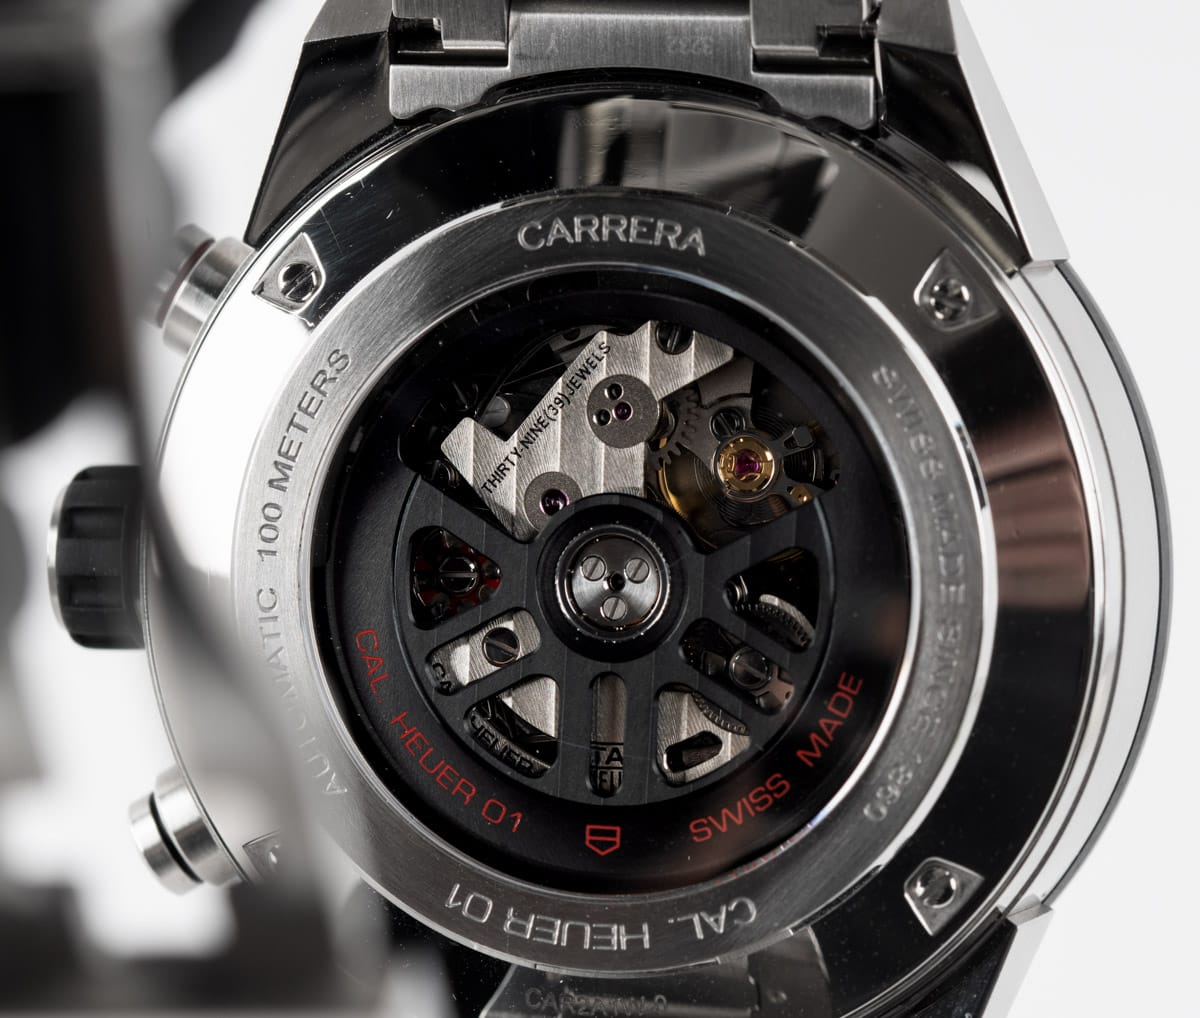 Caseback of Carrera Chronograph Calibre Heuer 01